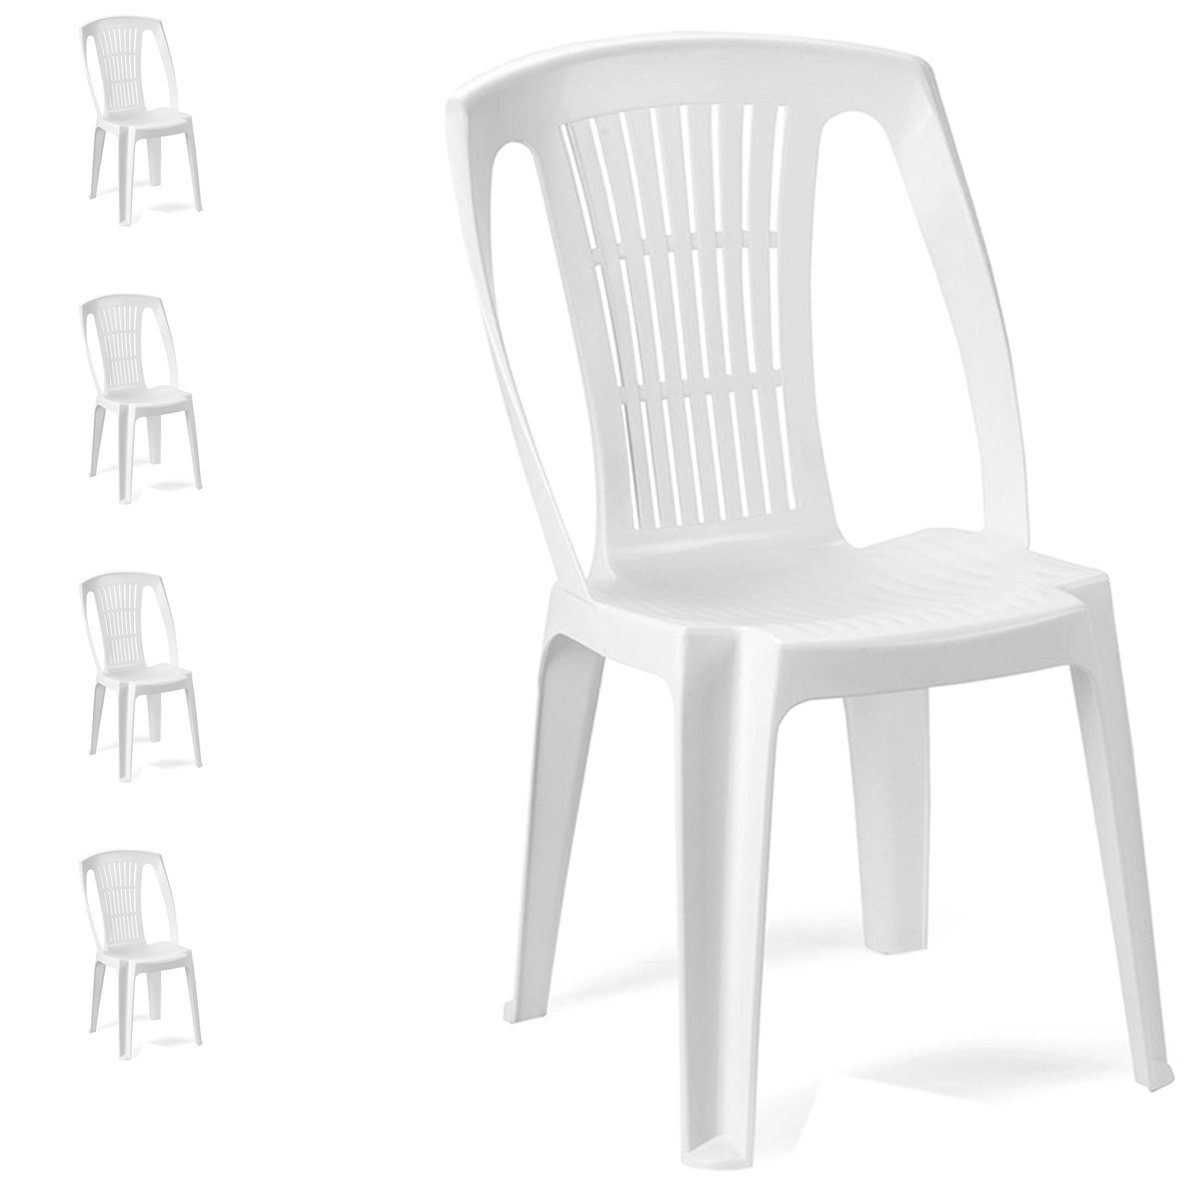 INDA-Exclusiv Armlehnstuhl 6 Stück Stapelstuhl Gartenstuhl Stapelsessel Kunststoff Weiß